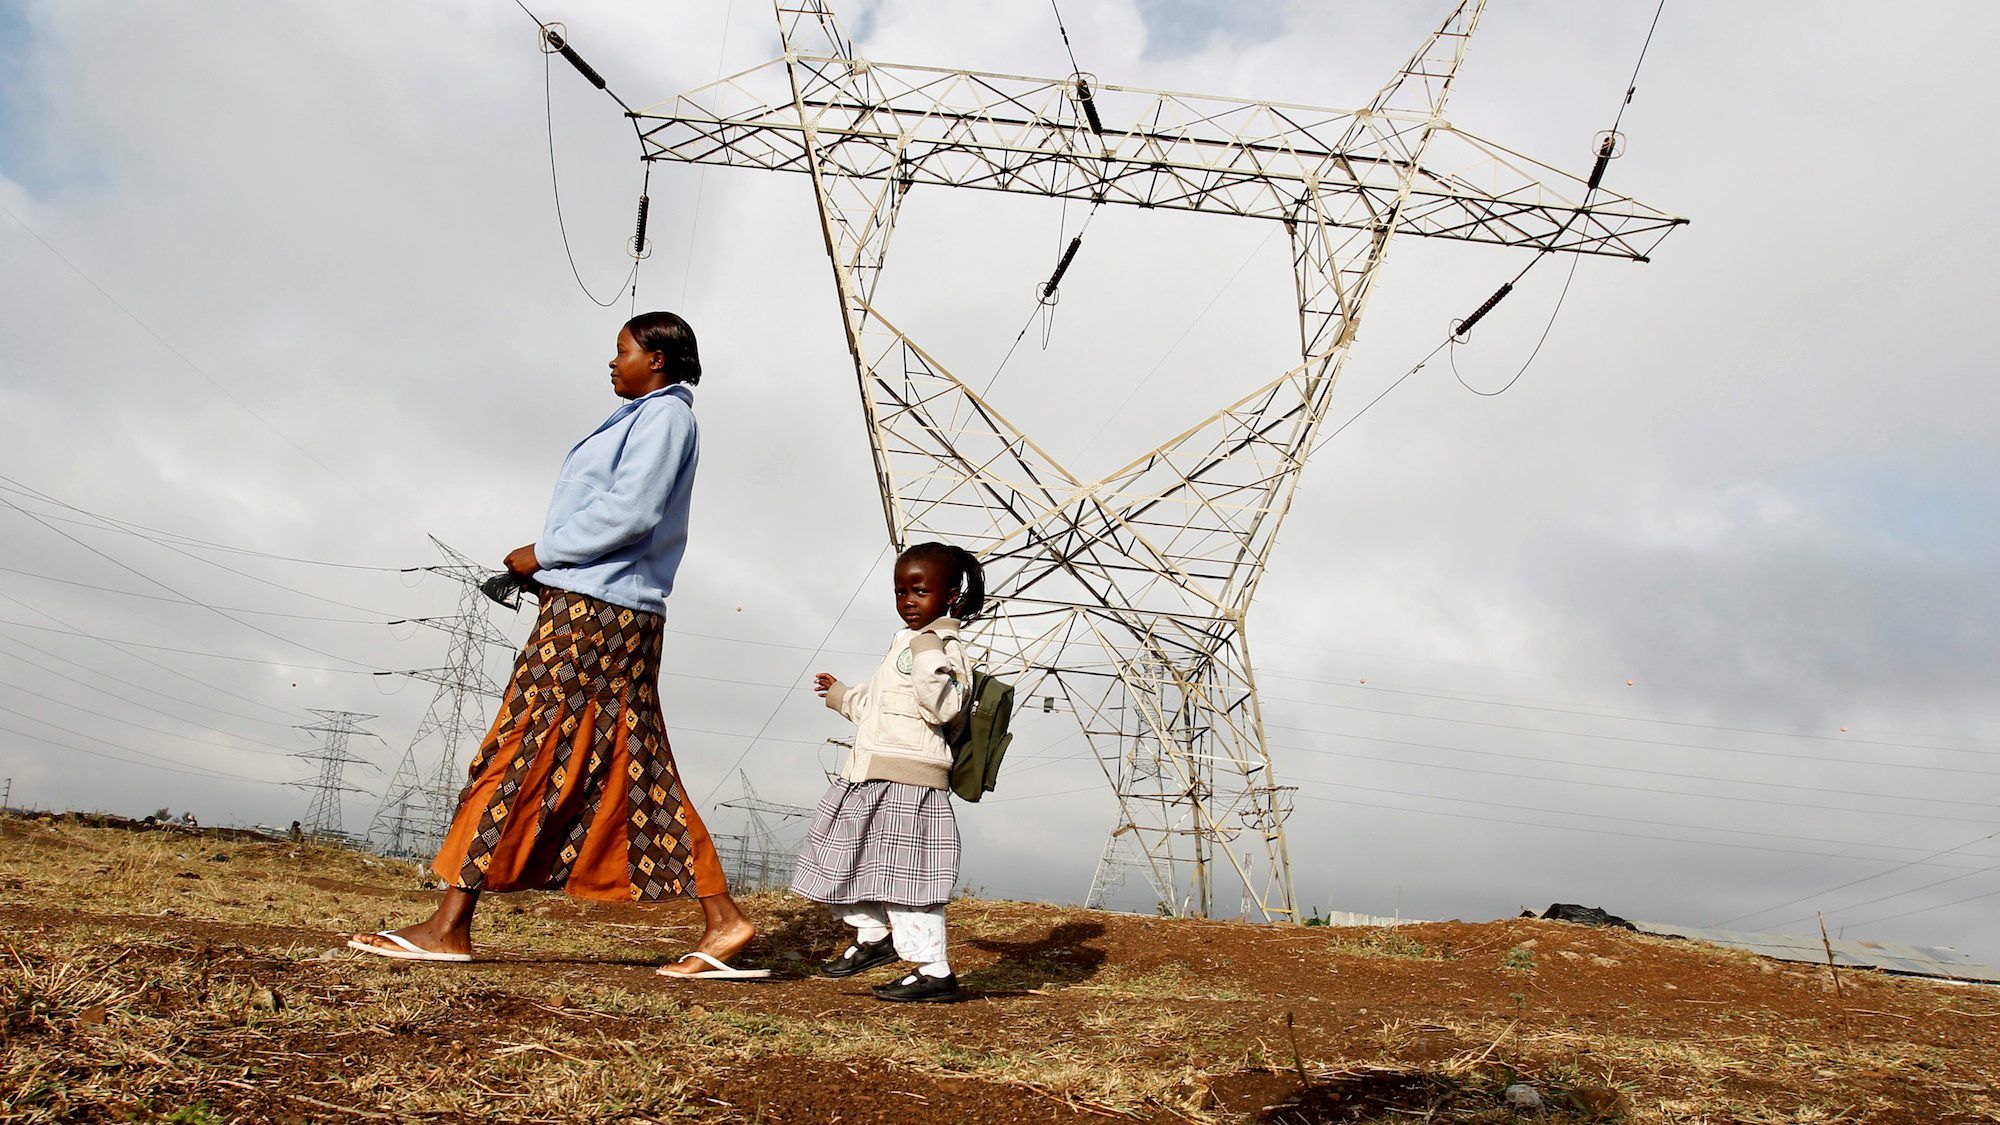 Kenya’s electrification camp